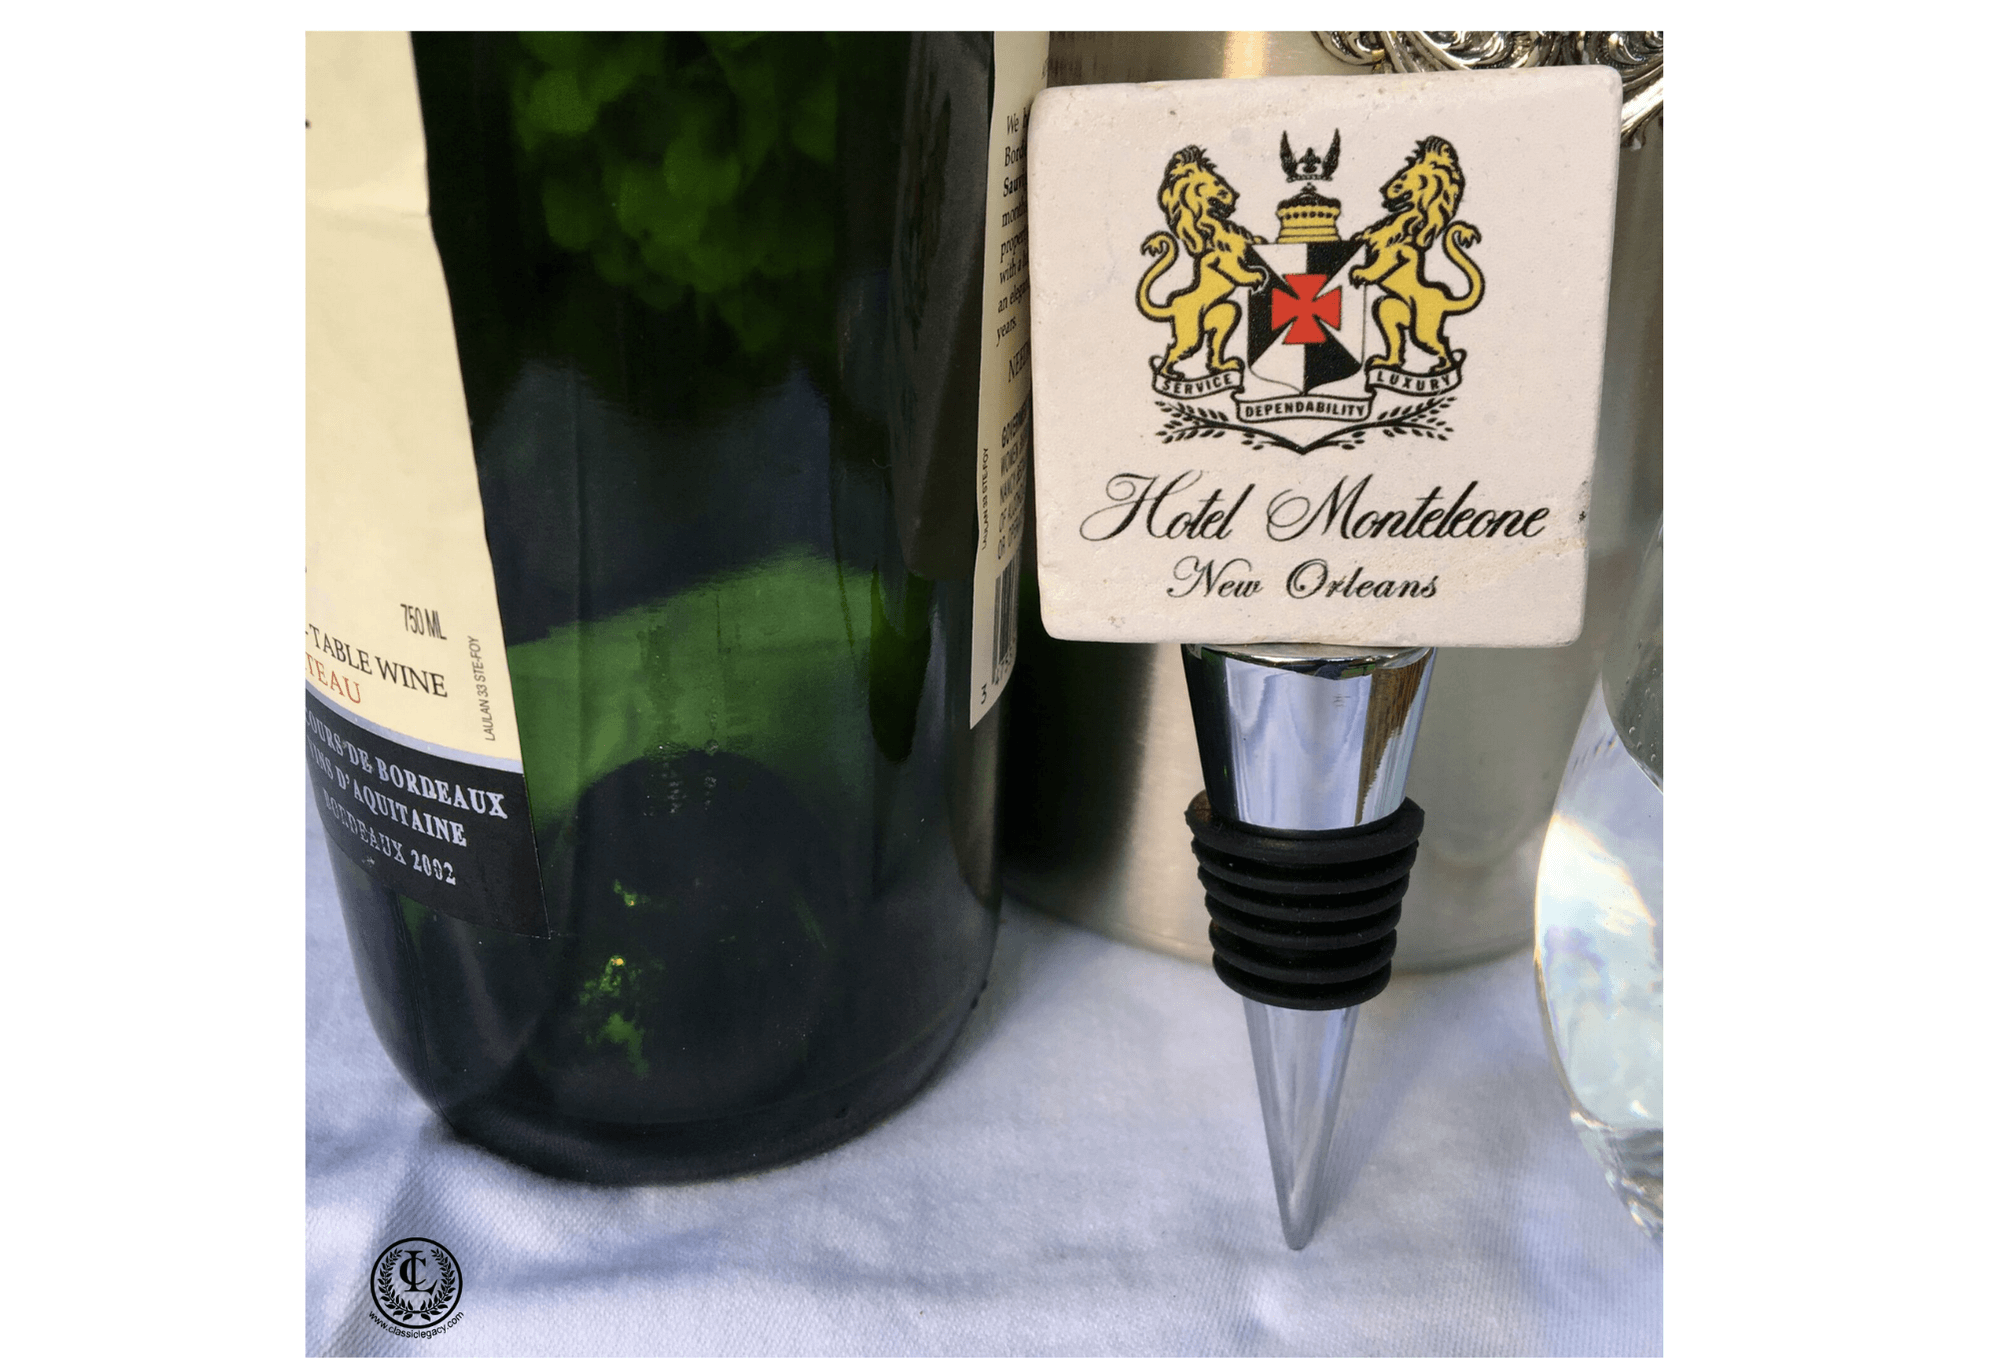 Custom Marble Bottle Stopper with image of Hotel Monteleone